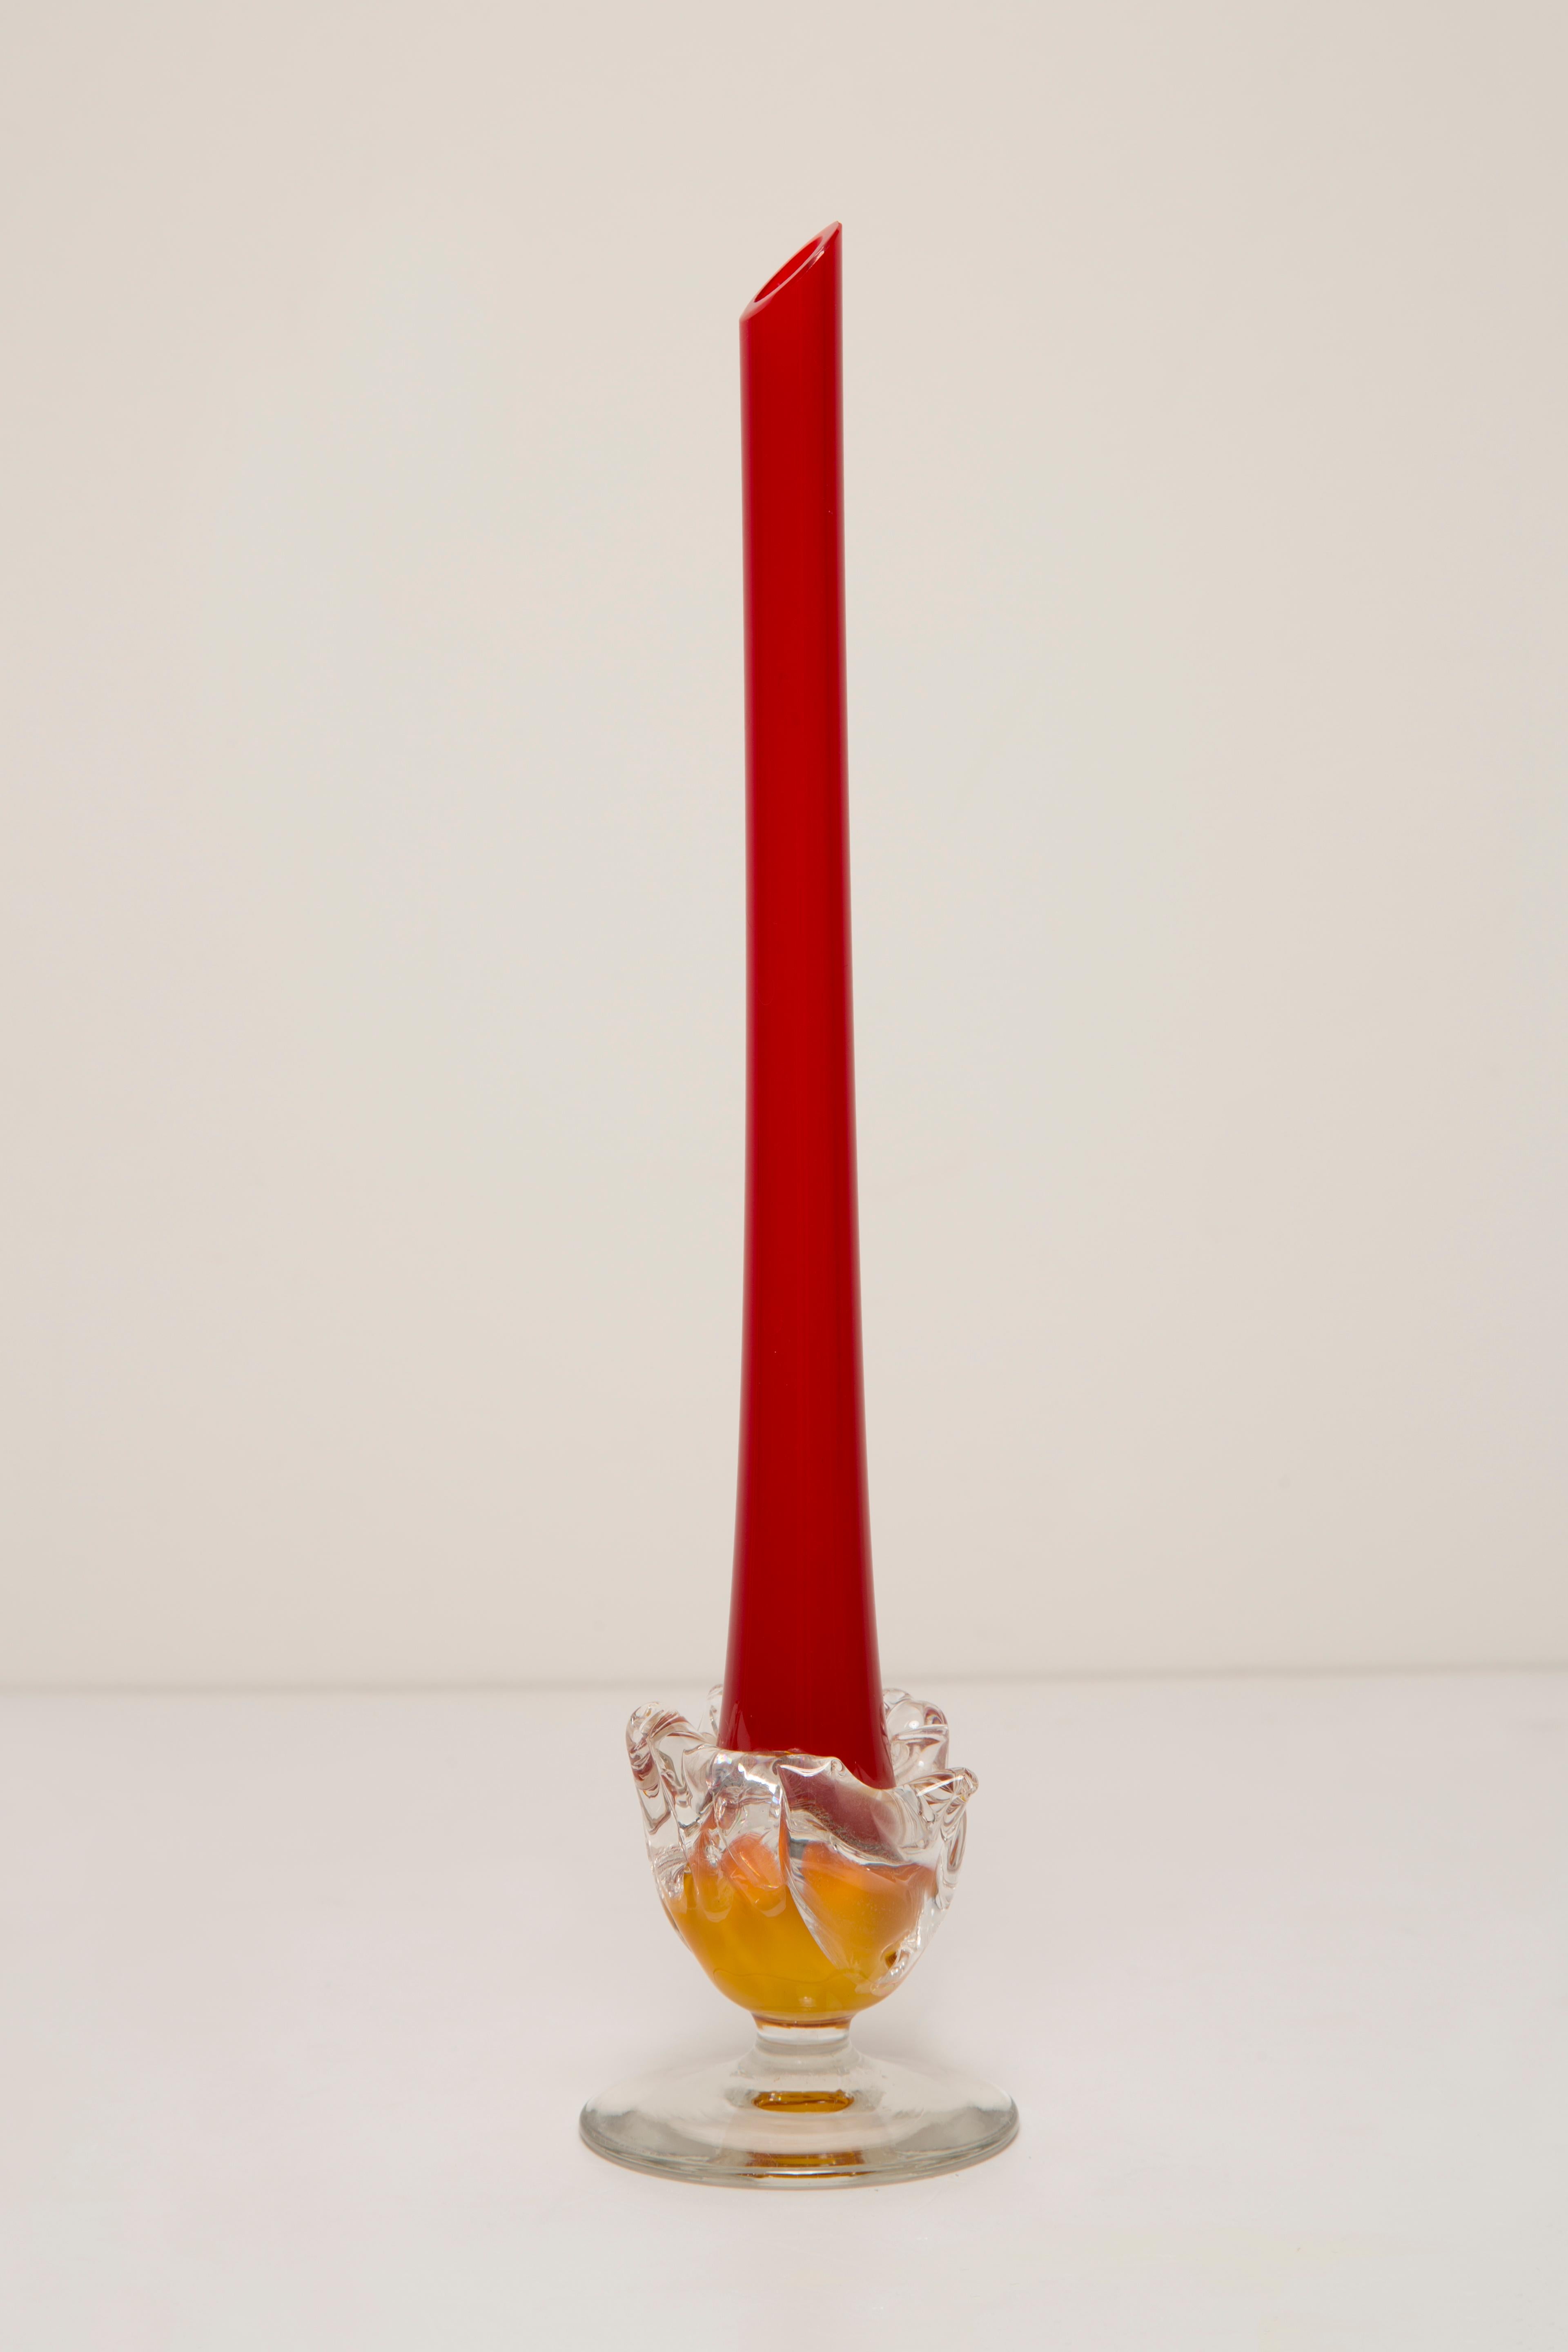 20th Century Midcentury Vintage Slim Red Decorative Glass Vase, Europe, 1960s For Sale